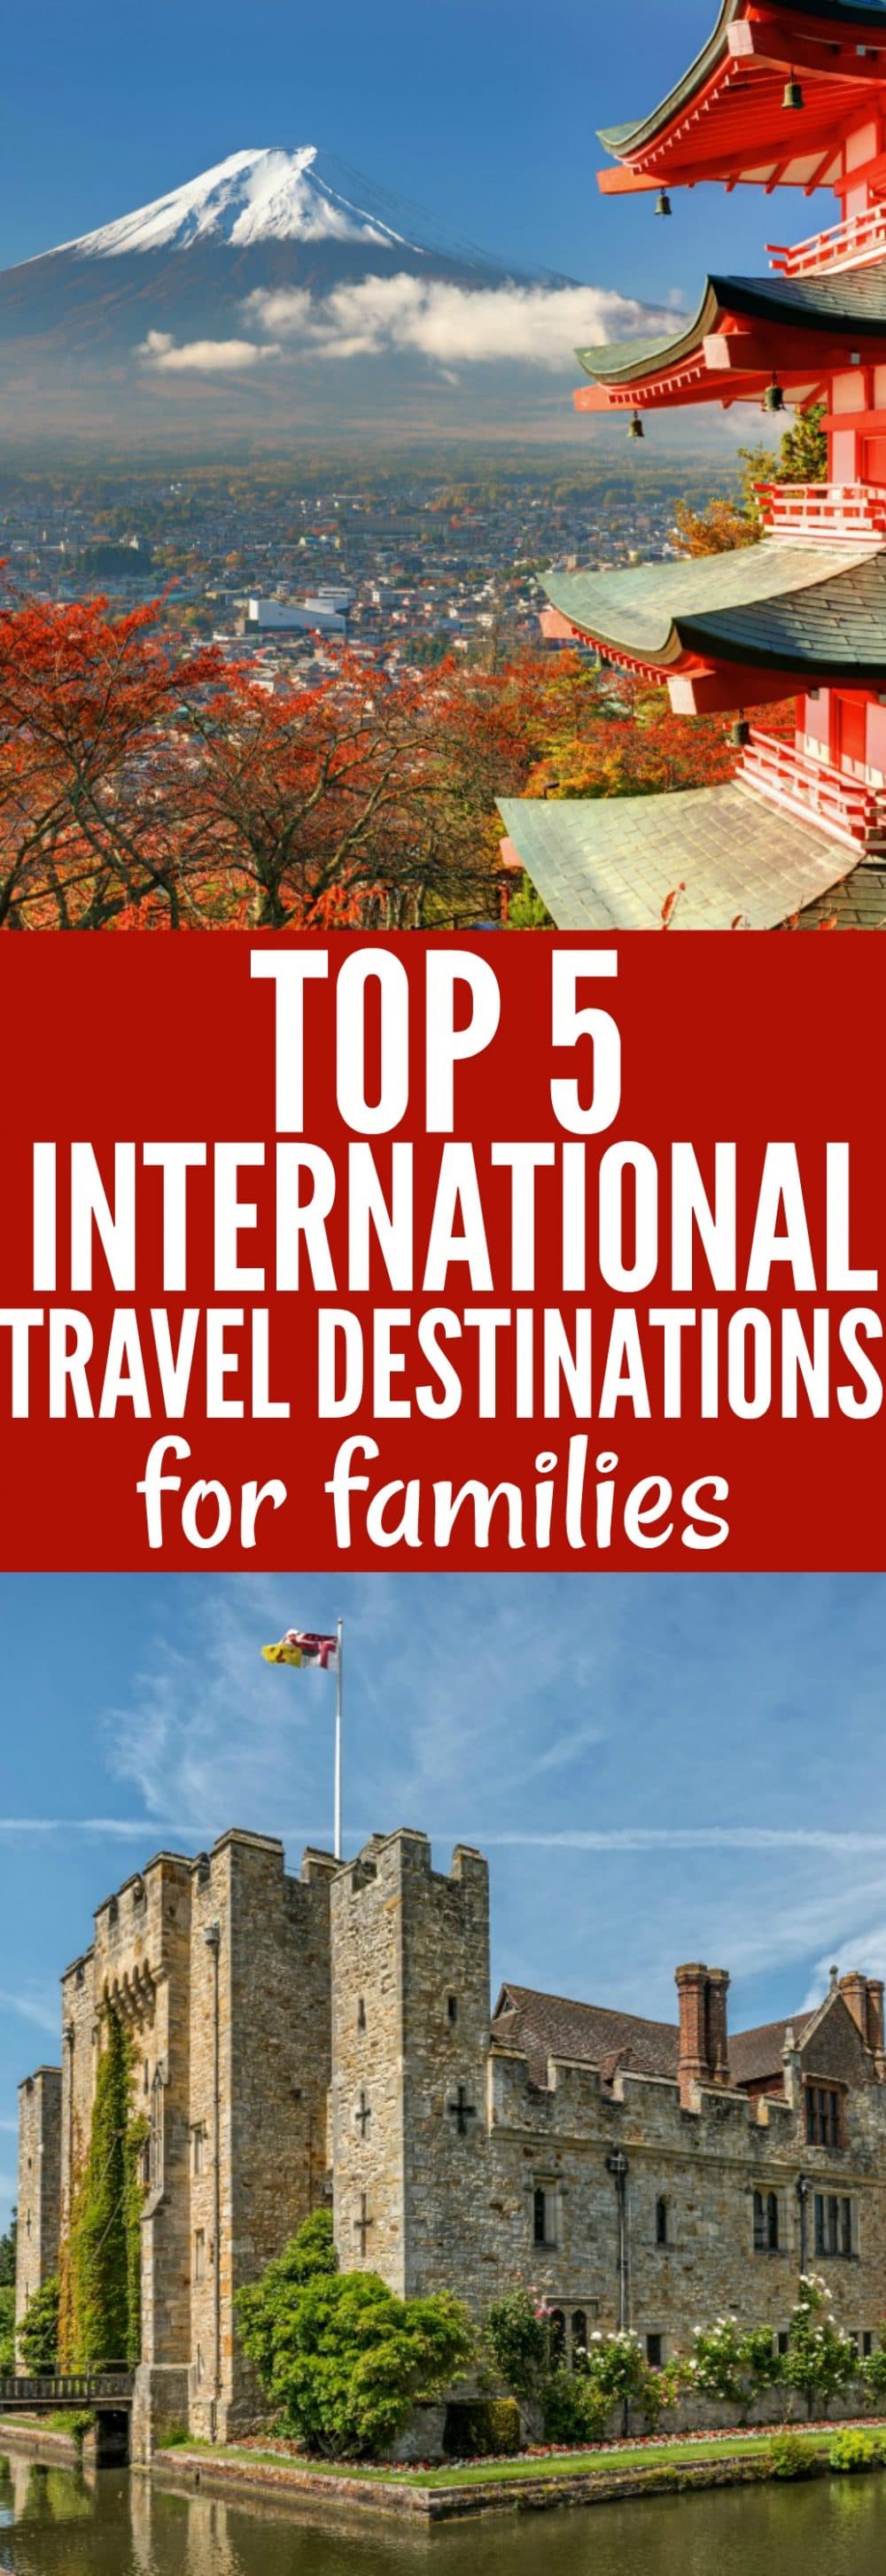 Top 5 International Travel Destinations for families